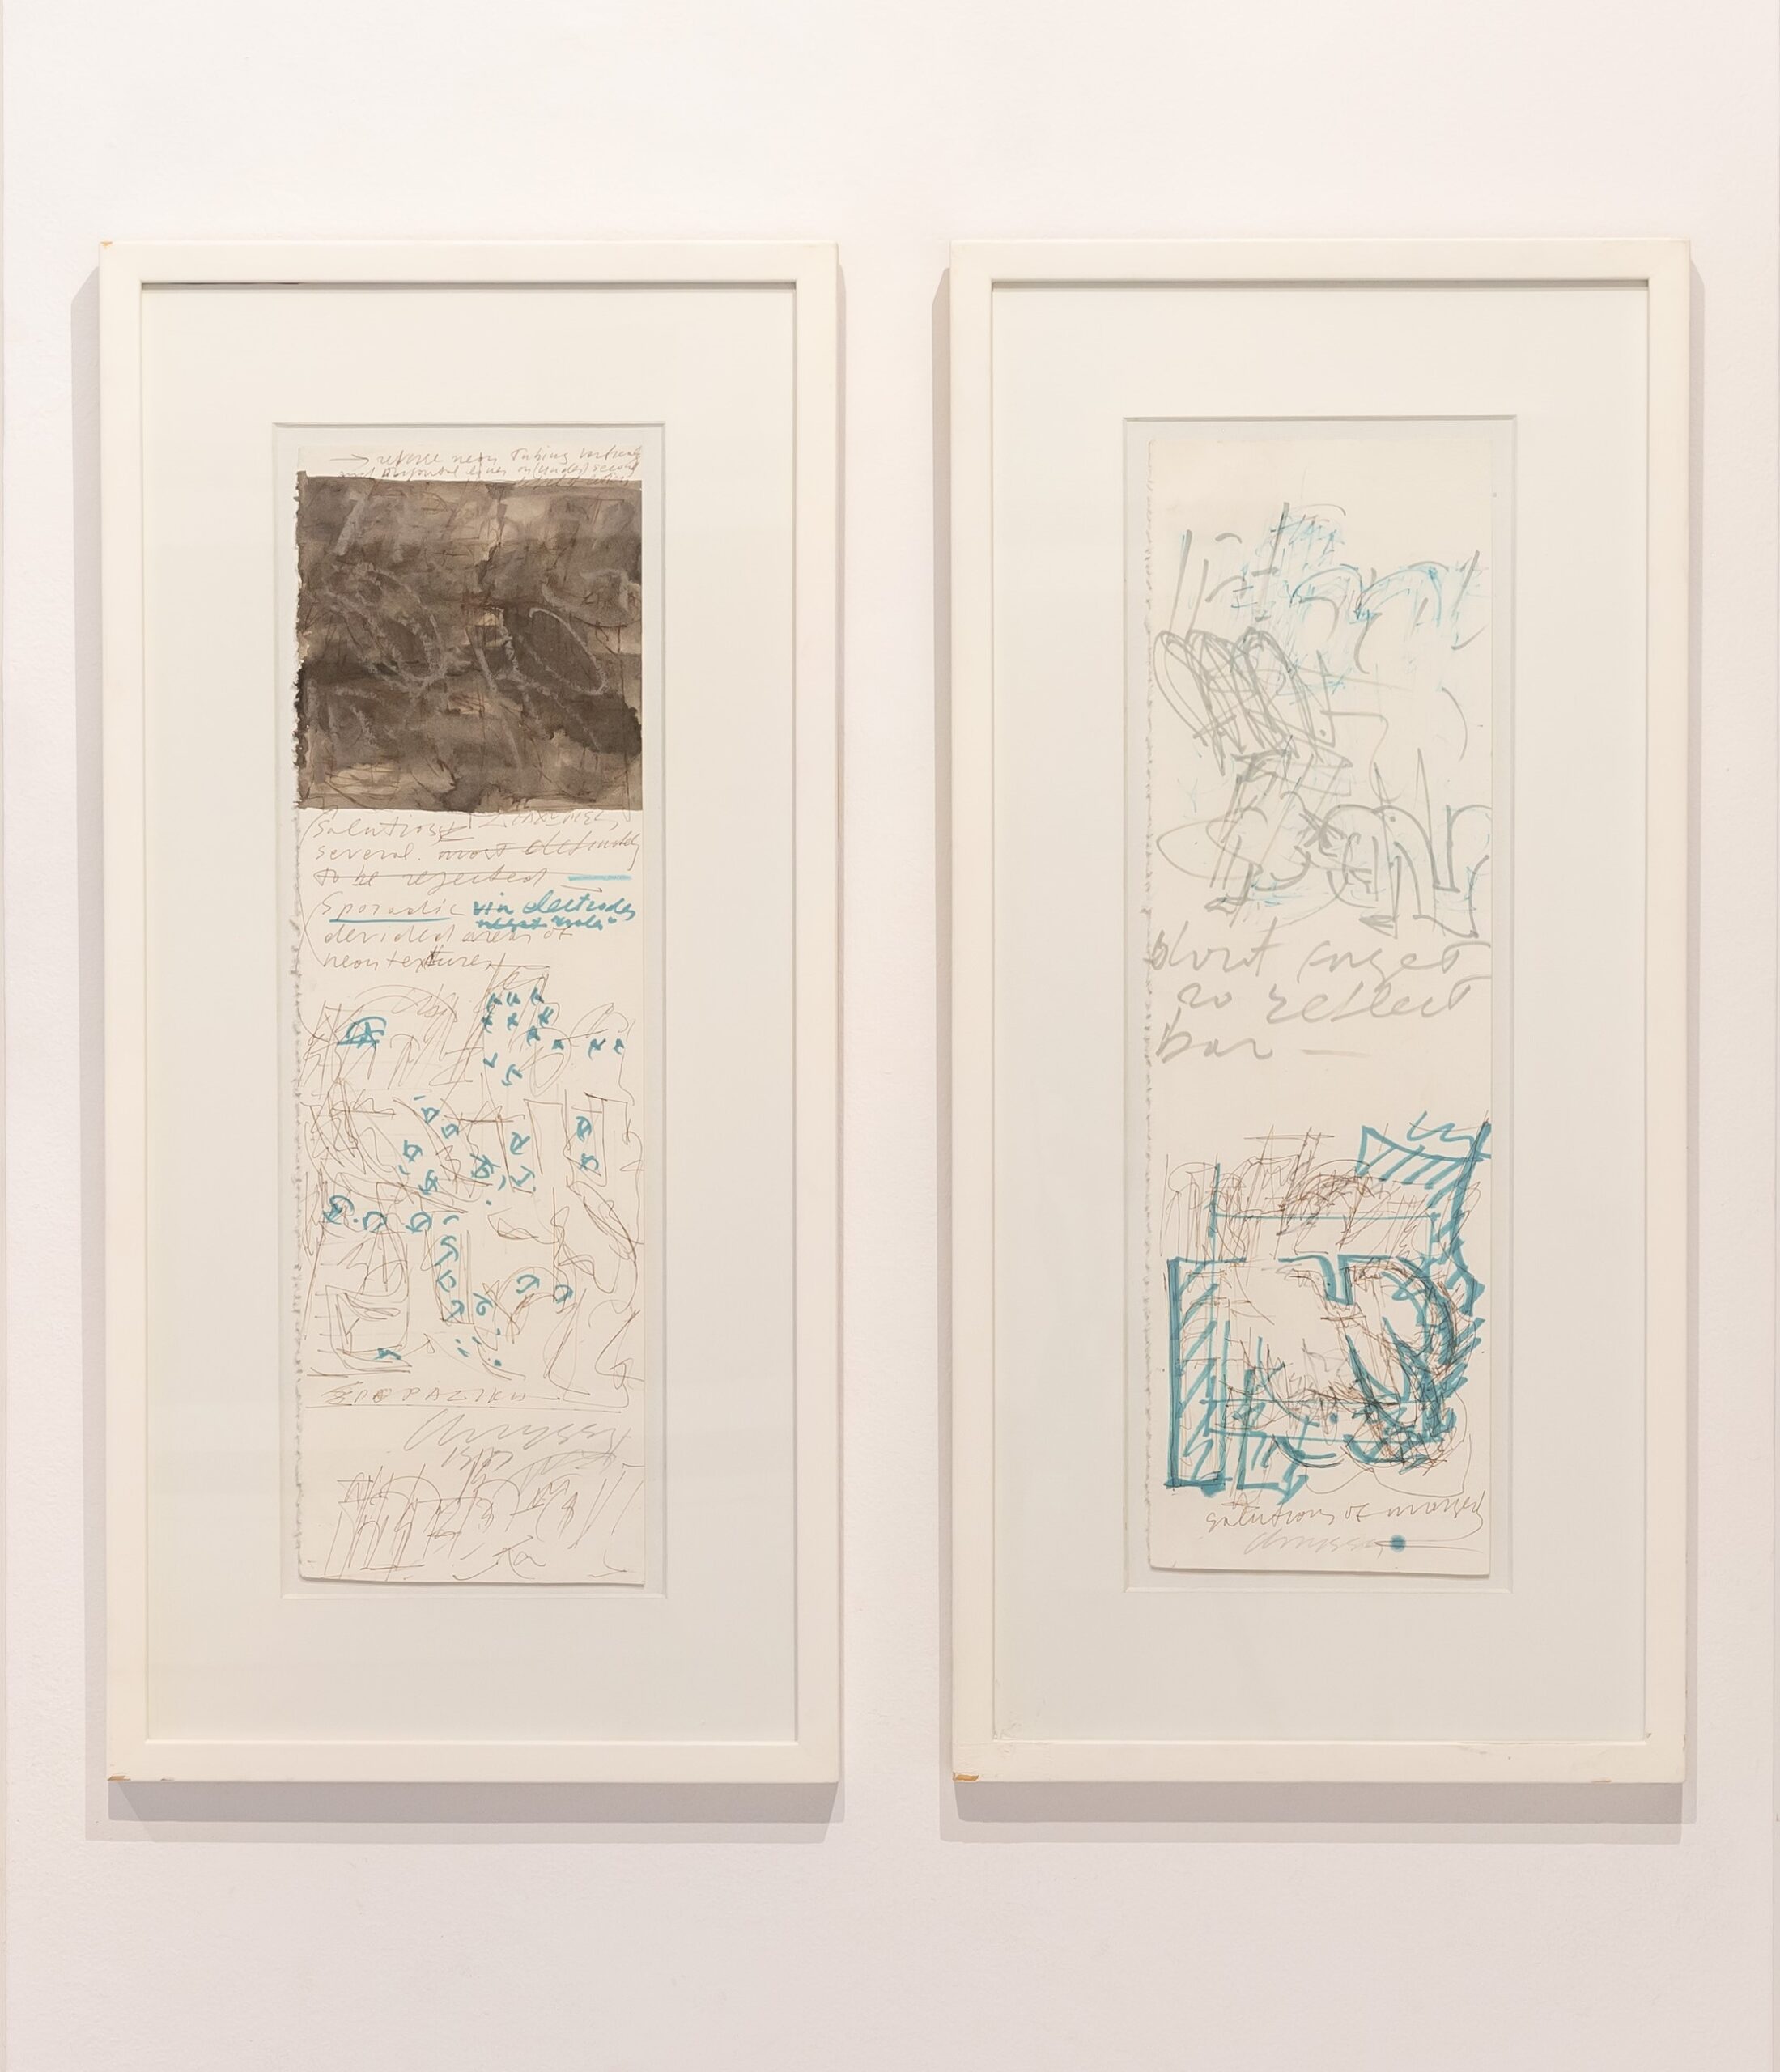 Chryssa, Χωρίς Τίτλο από την σειρά έργων LEO CASTELLI GALLERY, 1987, Μολύβι, ξυλομπογιές και μαρκαδόρος σε χαρτί, 65 x 19,5 εκ., με κορνίζα, 89 x 42,5 εκ.